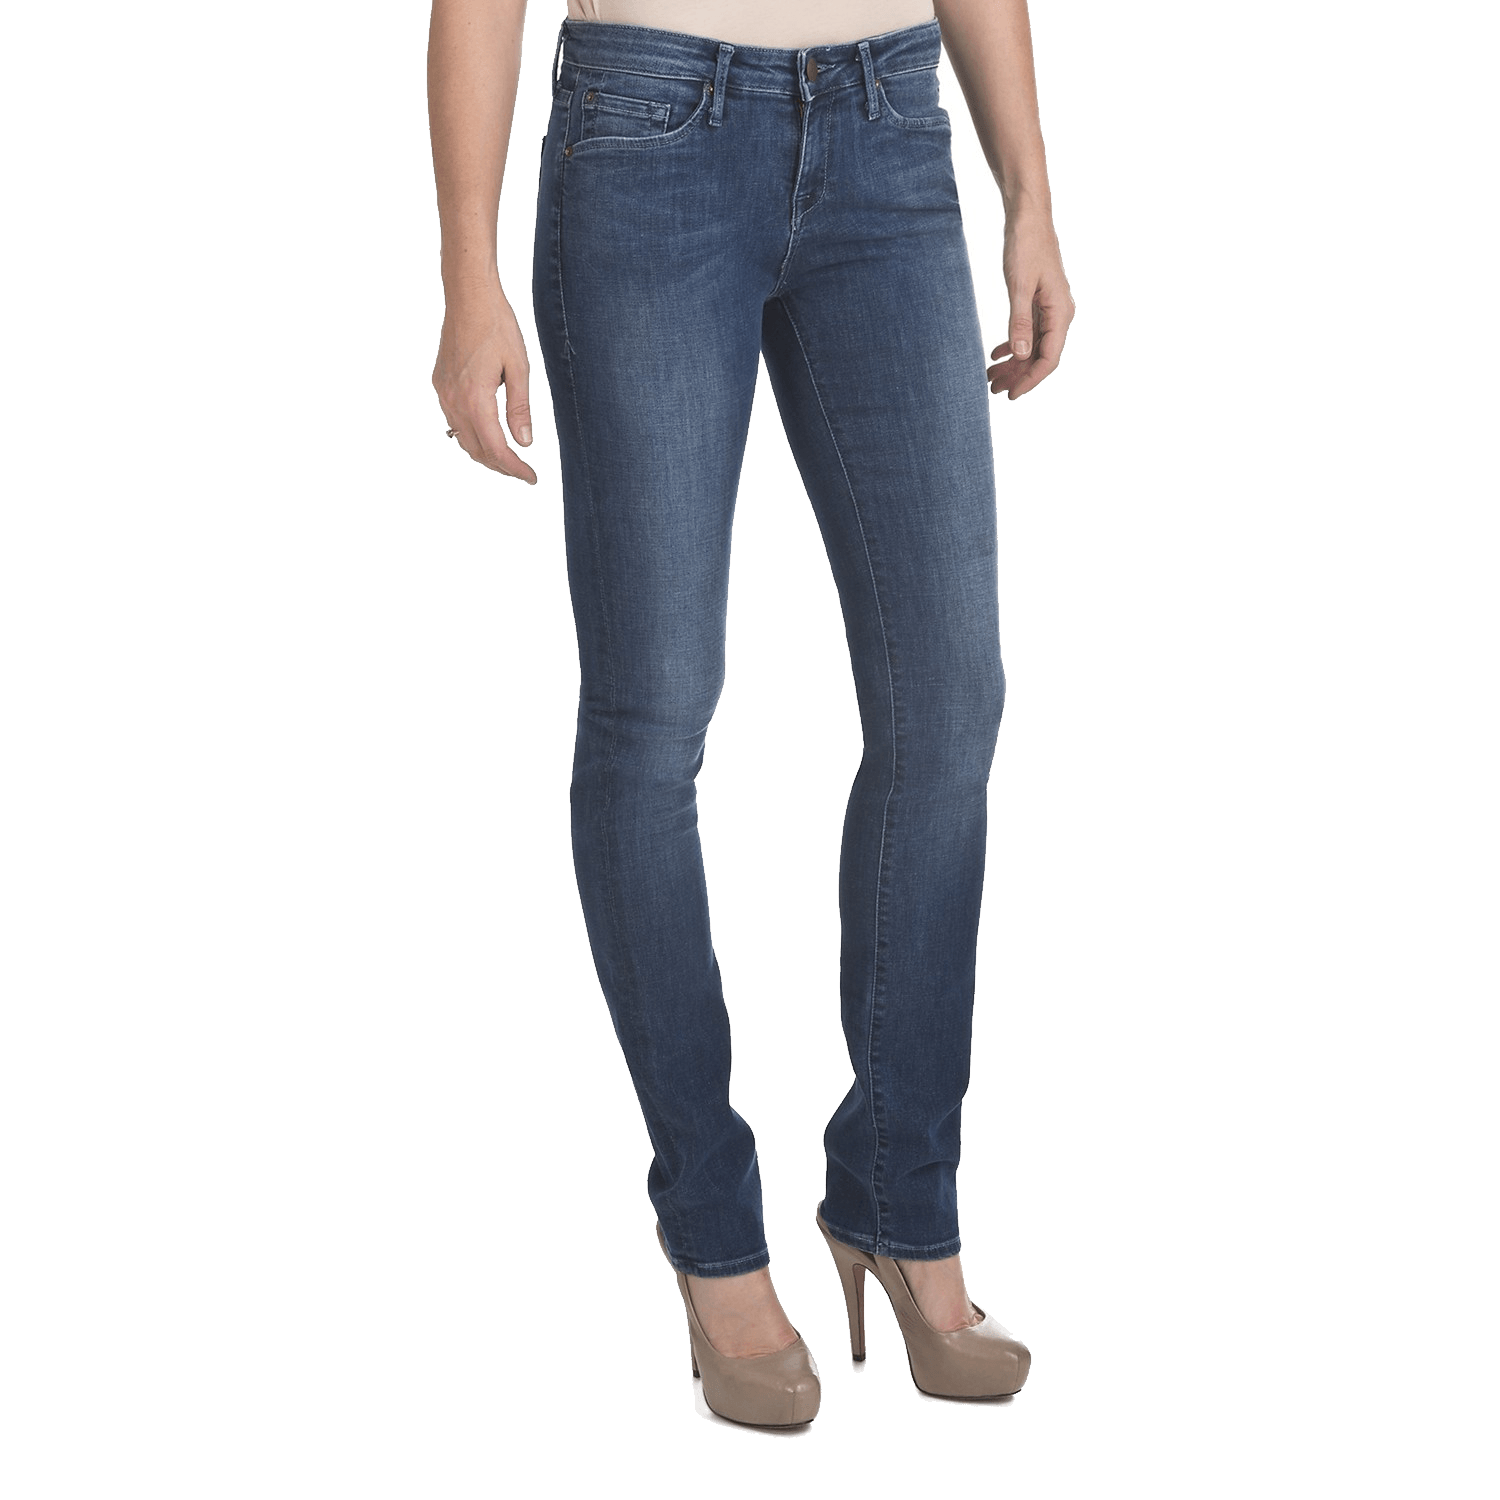 custom measured jeans